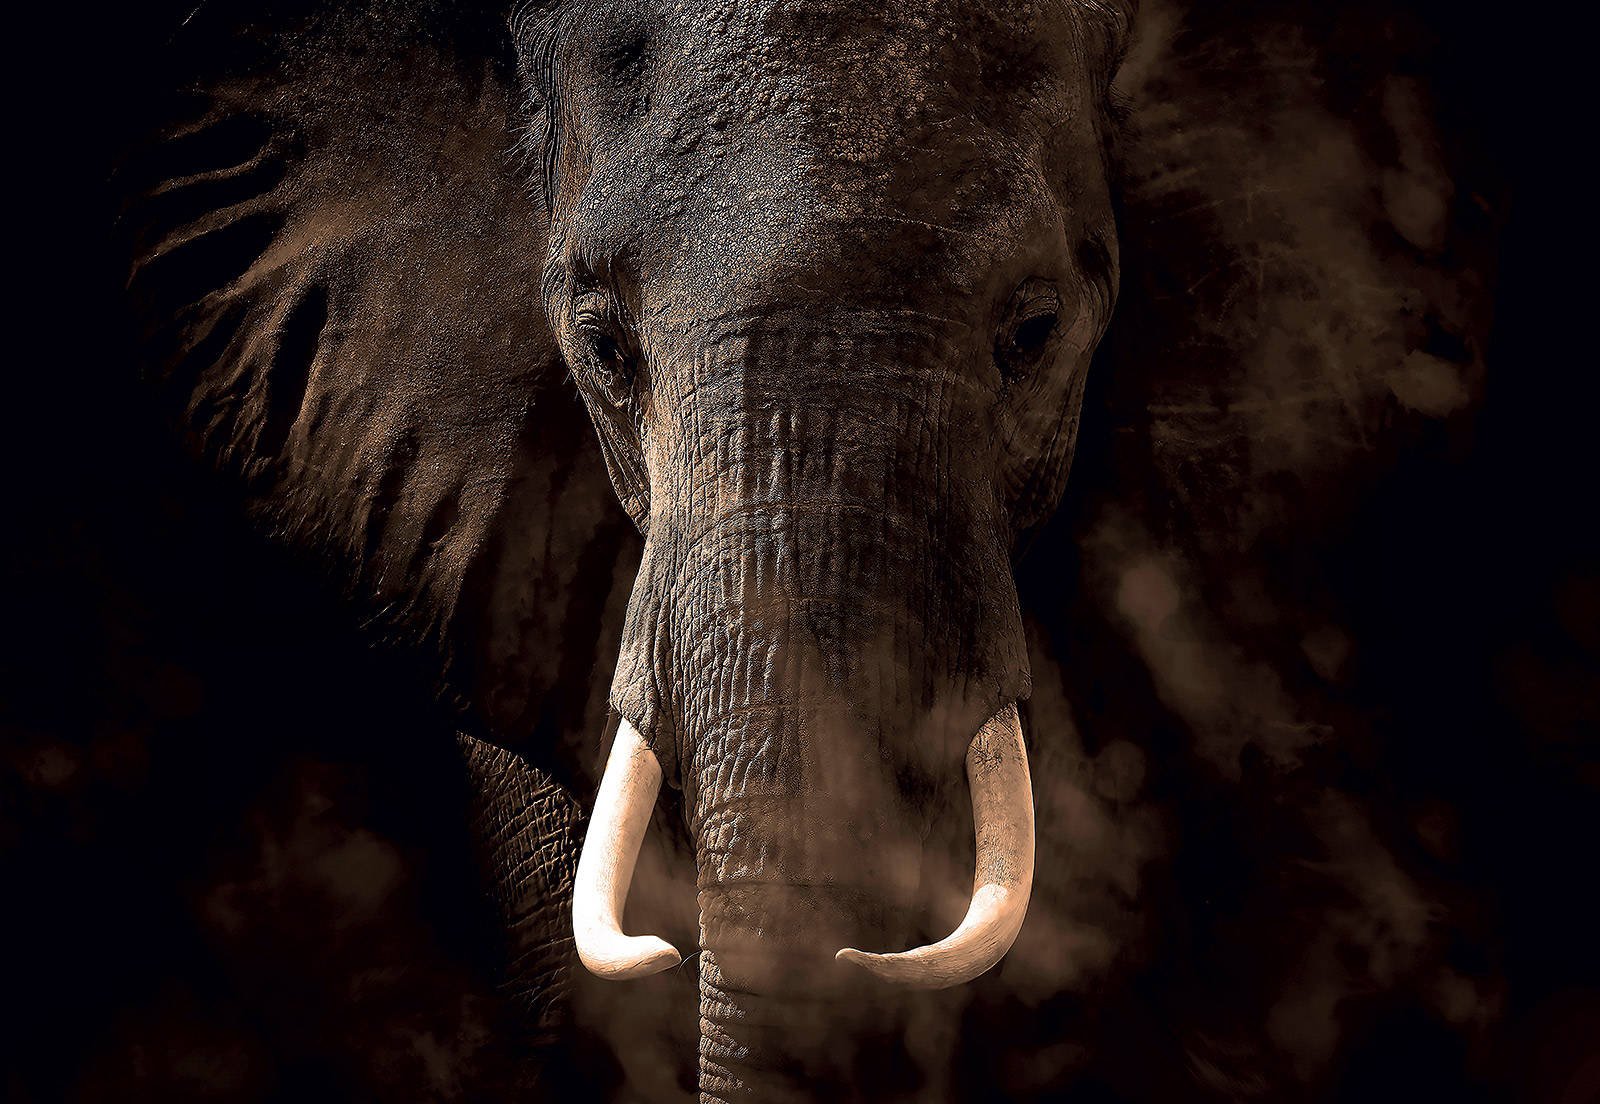 Fotótapéta: Elefánt - 368x254cm